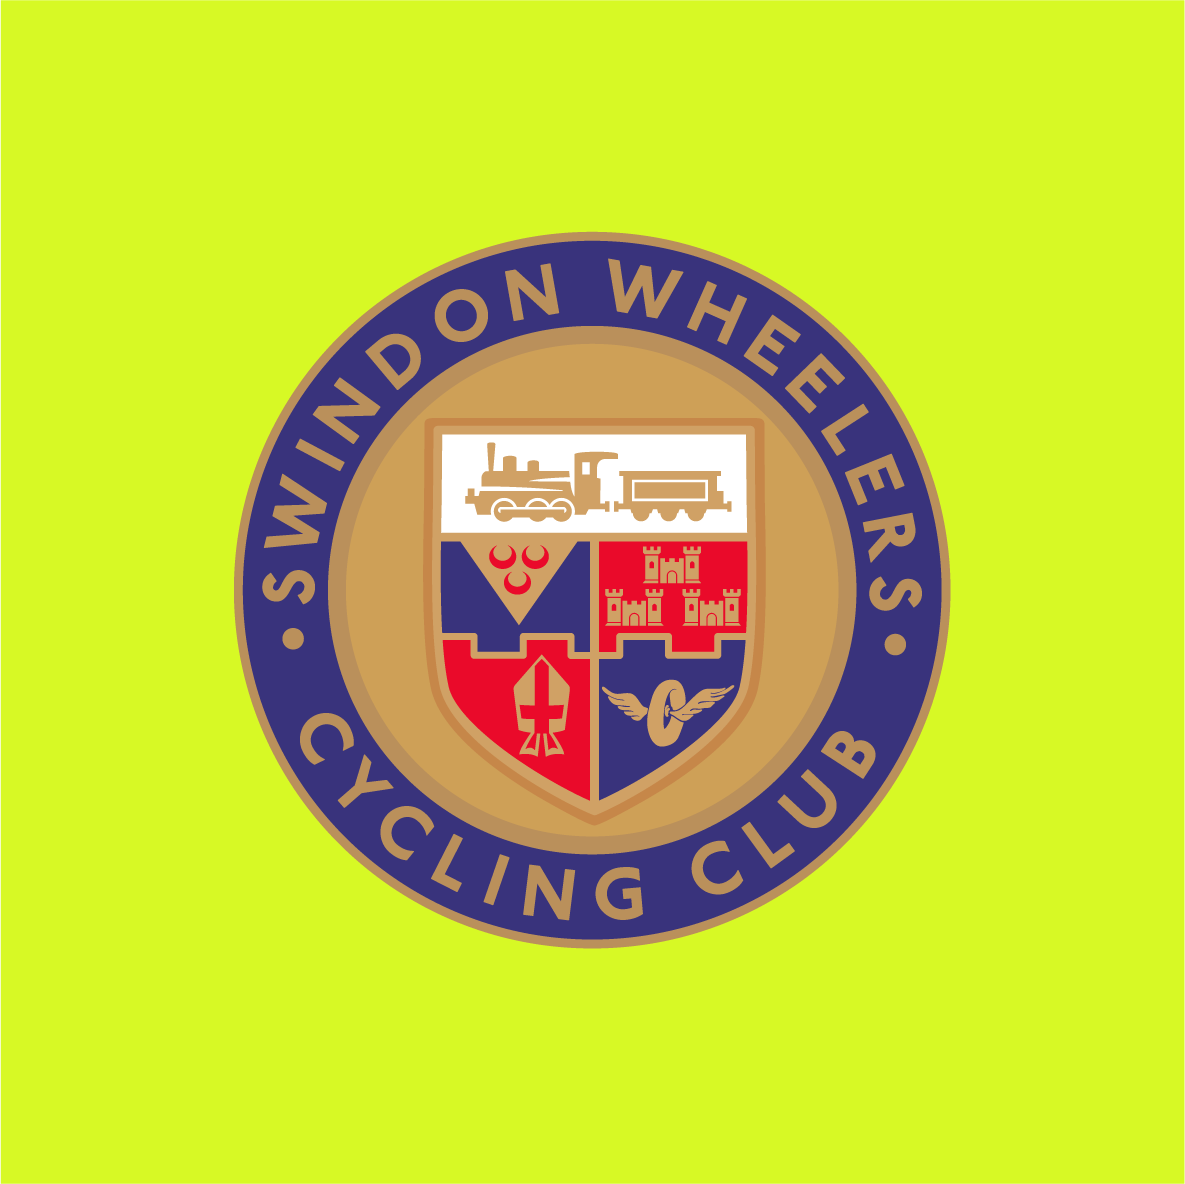 Club Image for SWINDON WHEELERS HI-VIZ